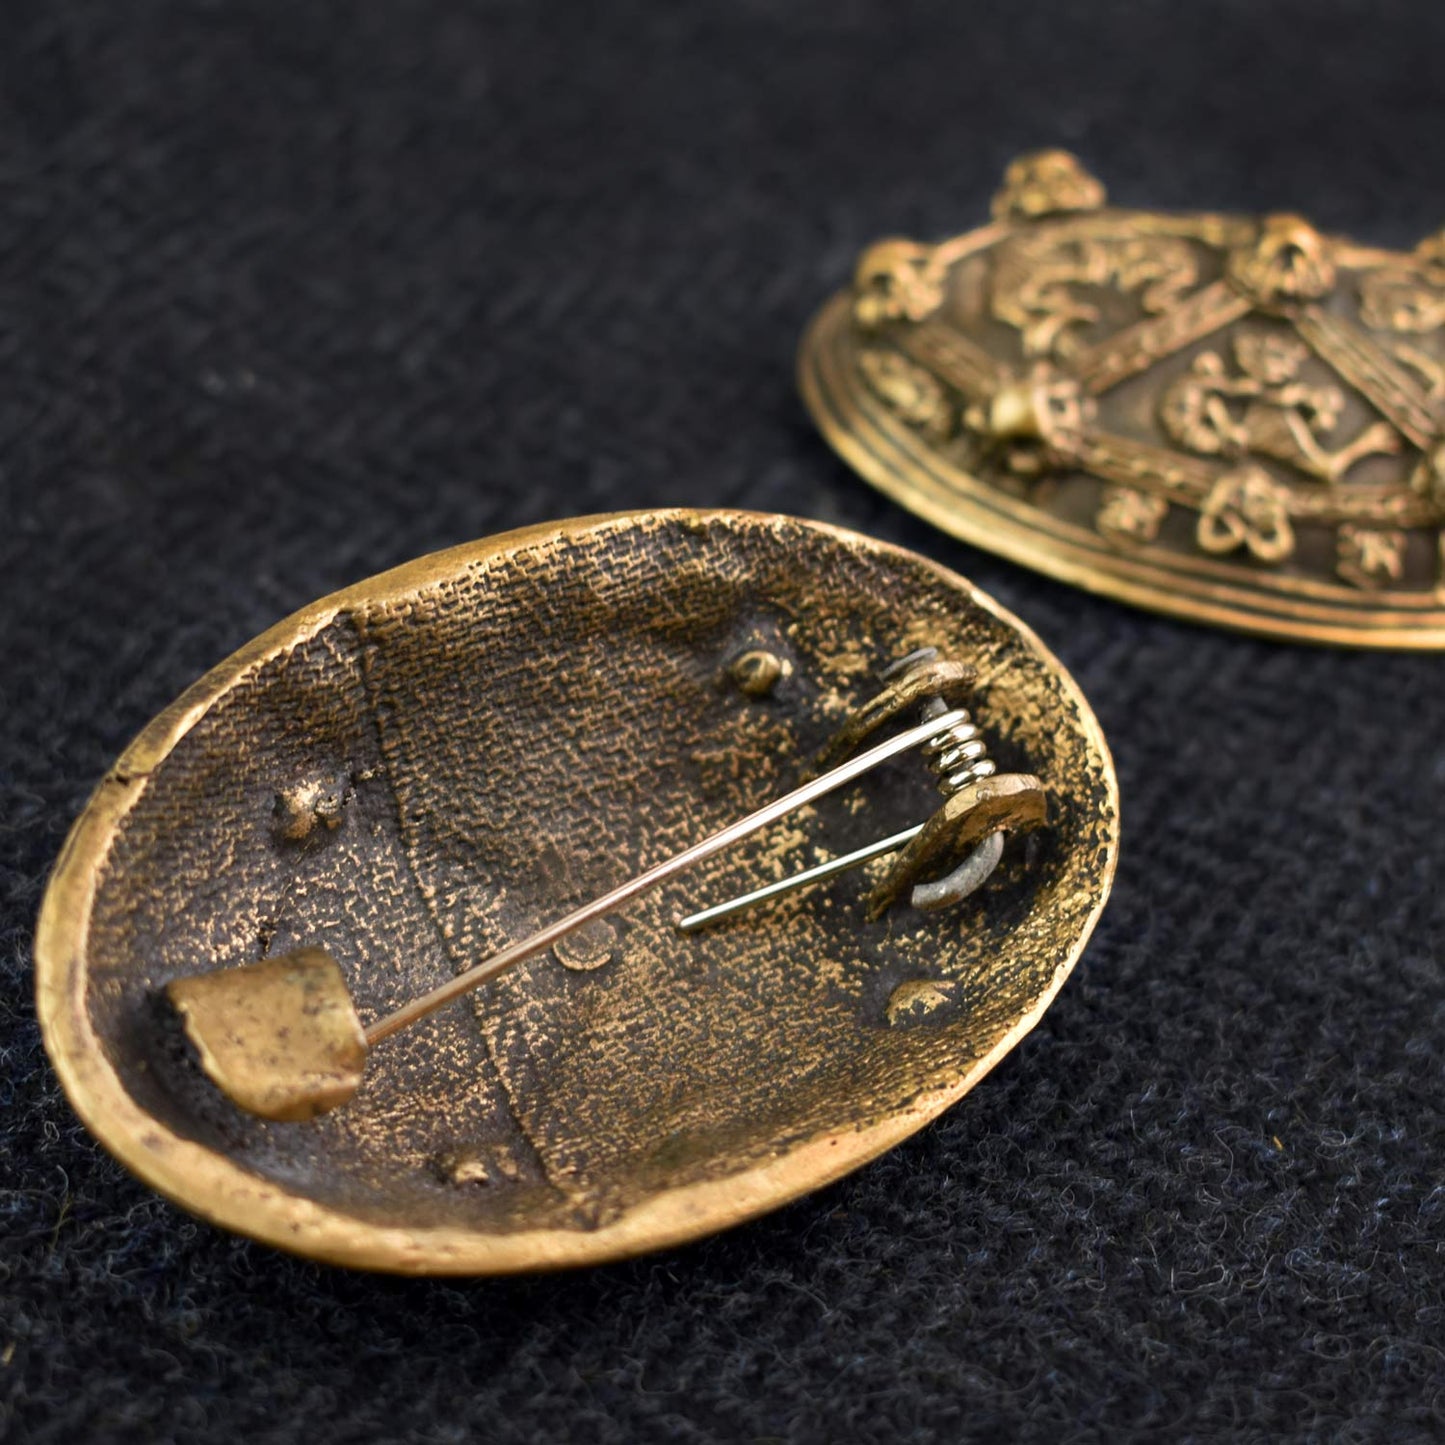 Pair of Tortoise Brooches - Bronze